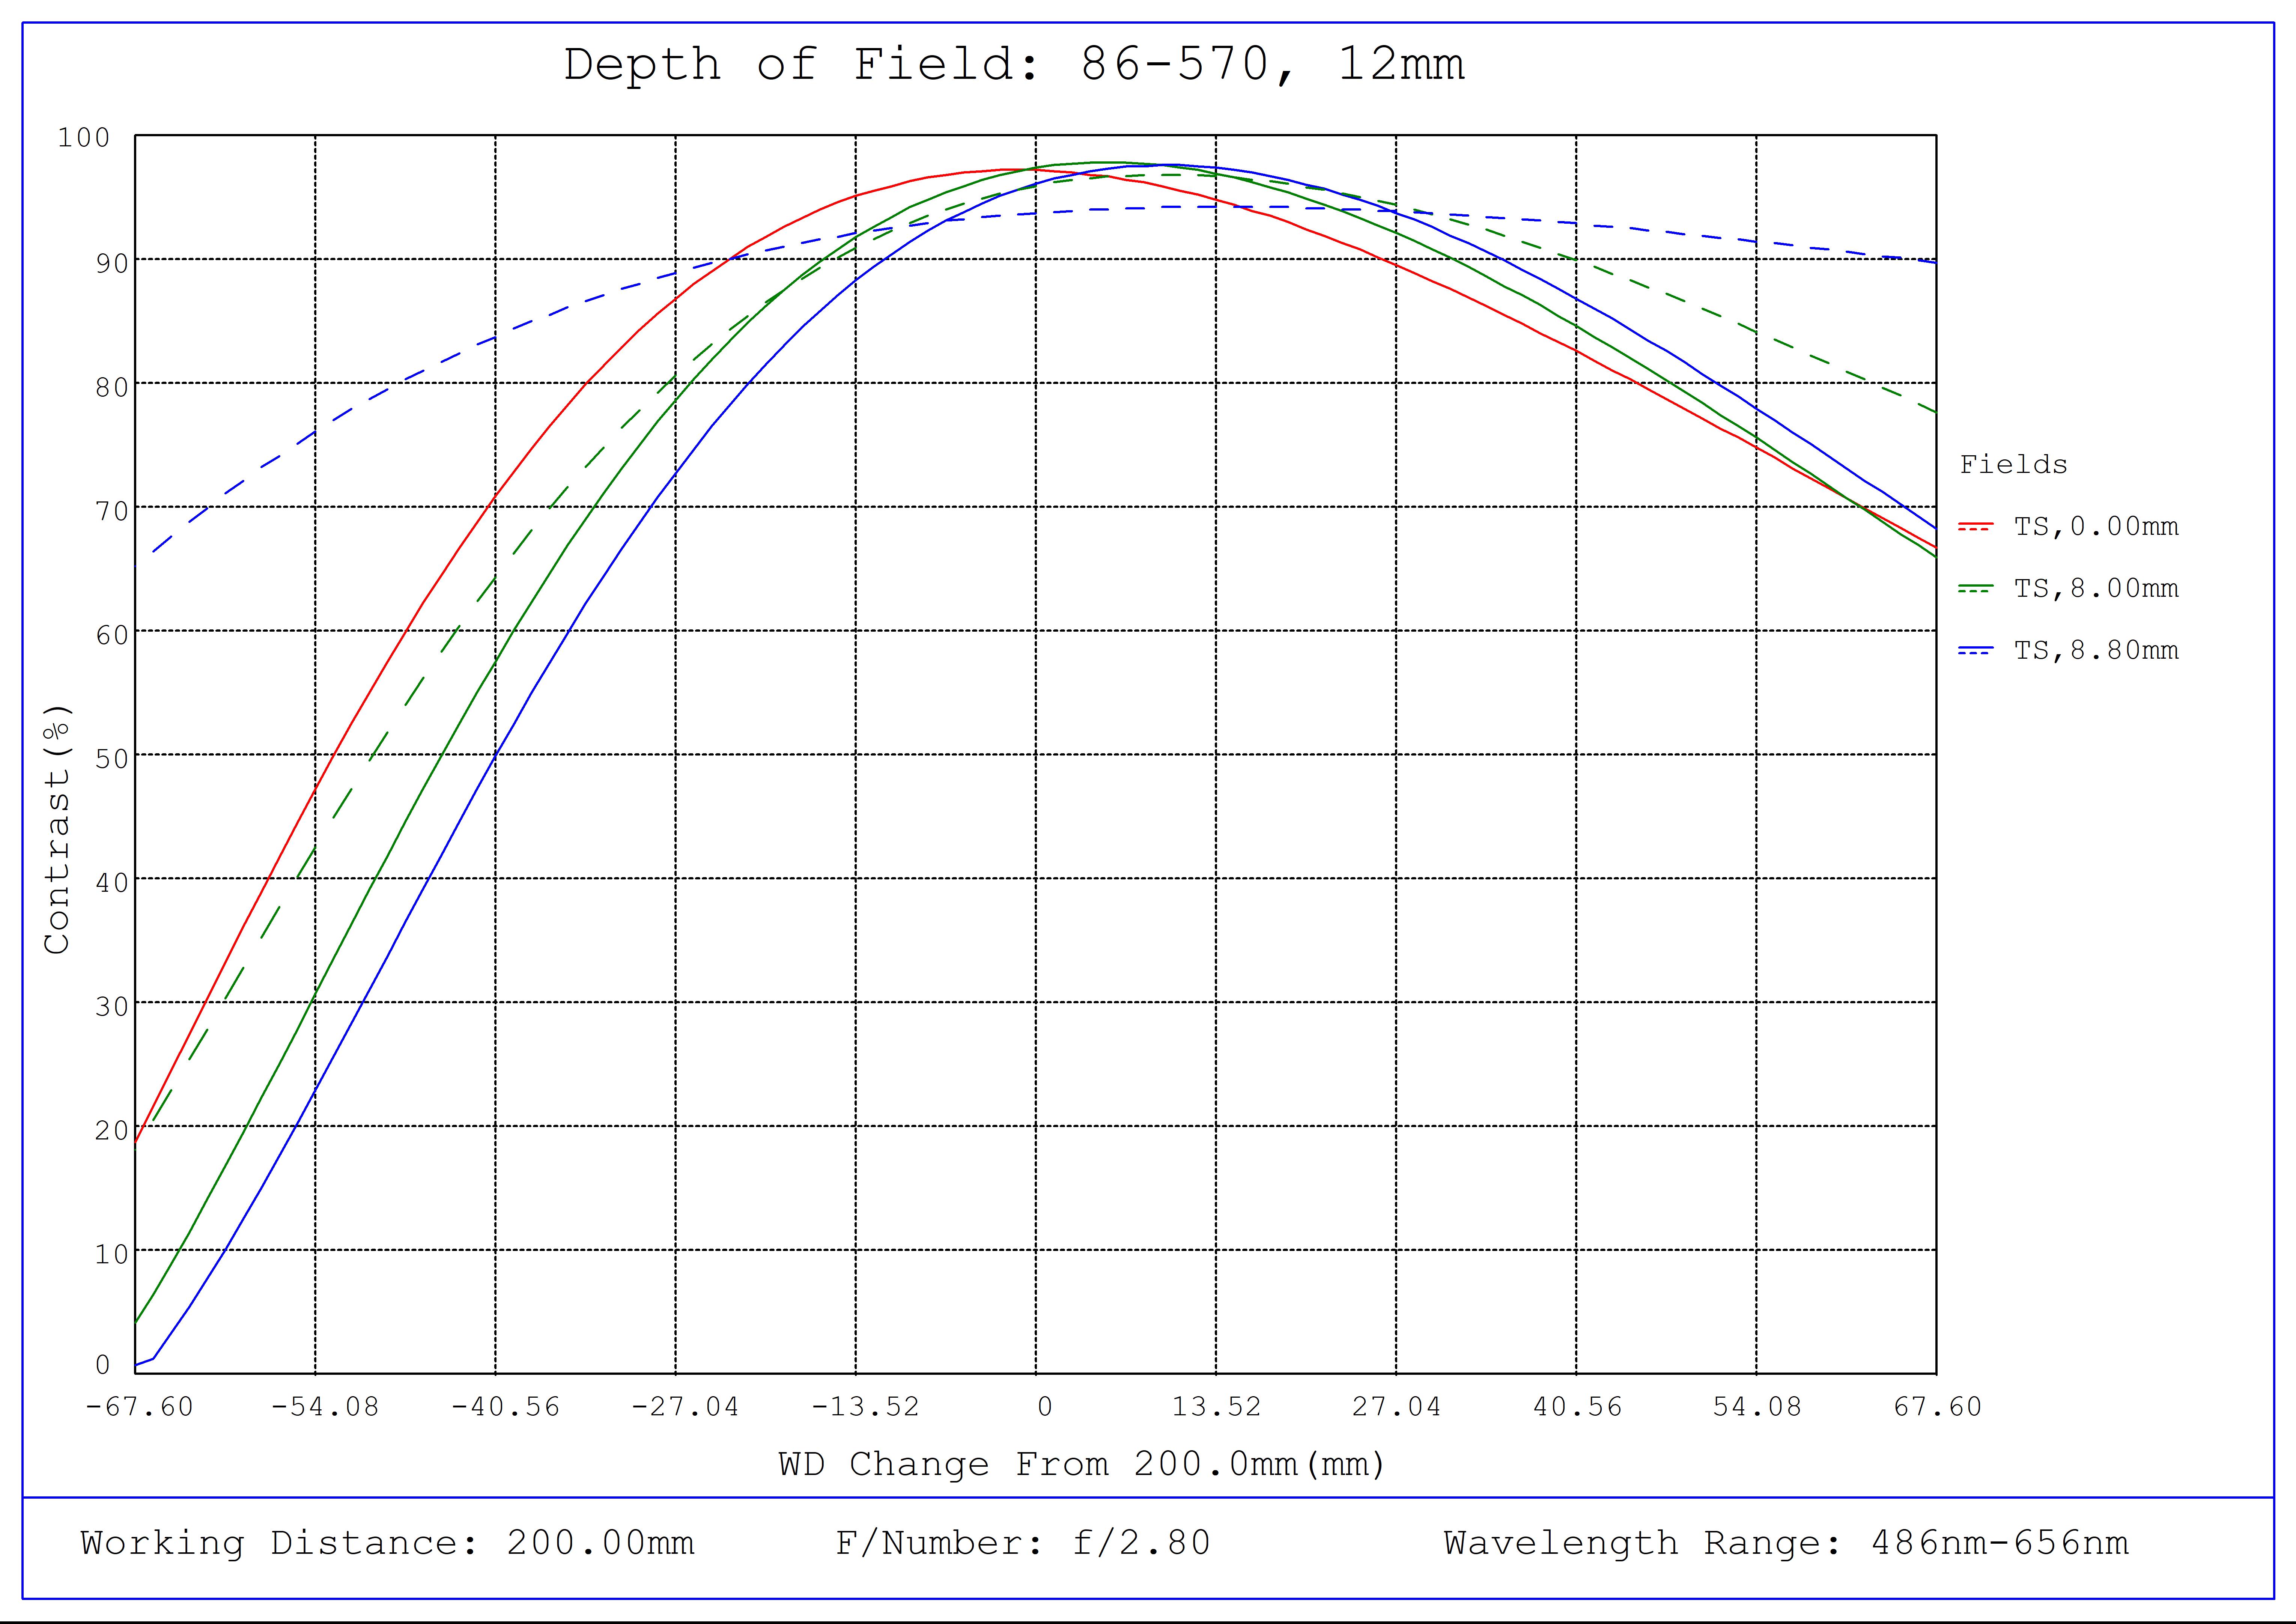 #86-570, 12mm Focal Length, HP Series Fixed Focal Length Lens, Depth of Field Plot, 200mm Working Distance, f2.8